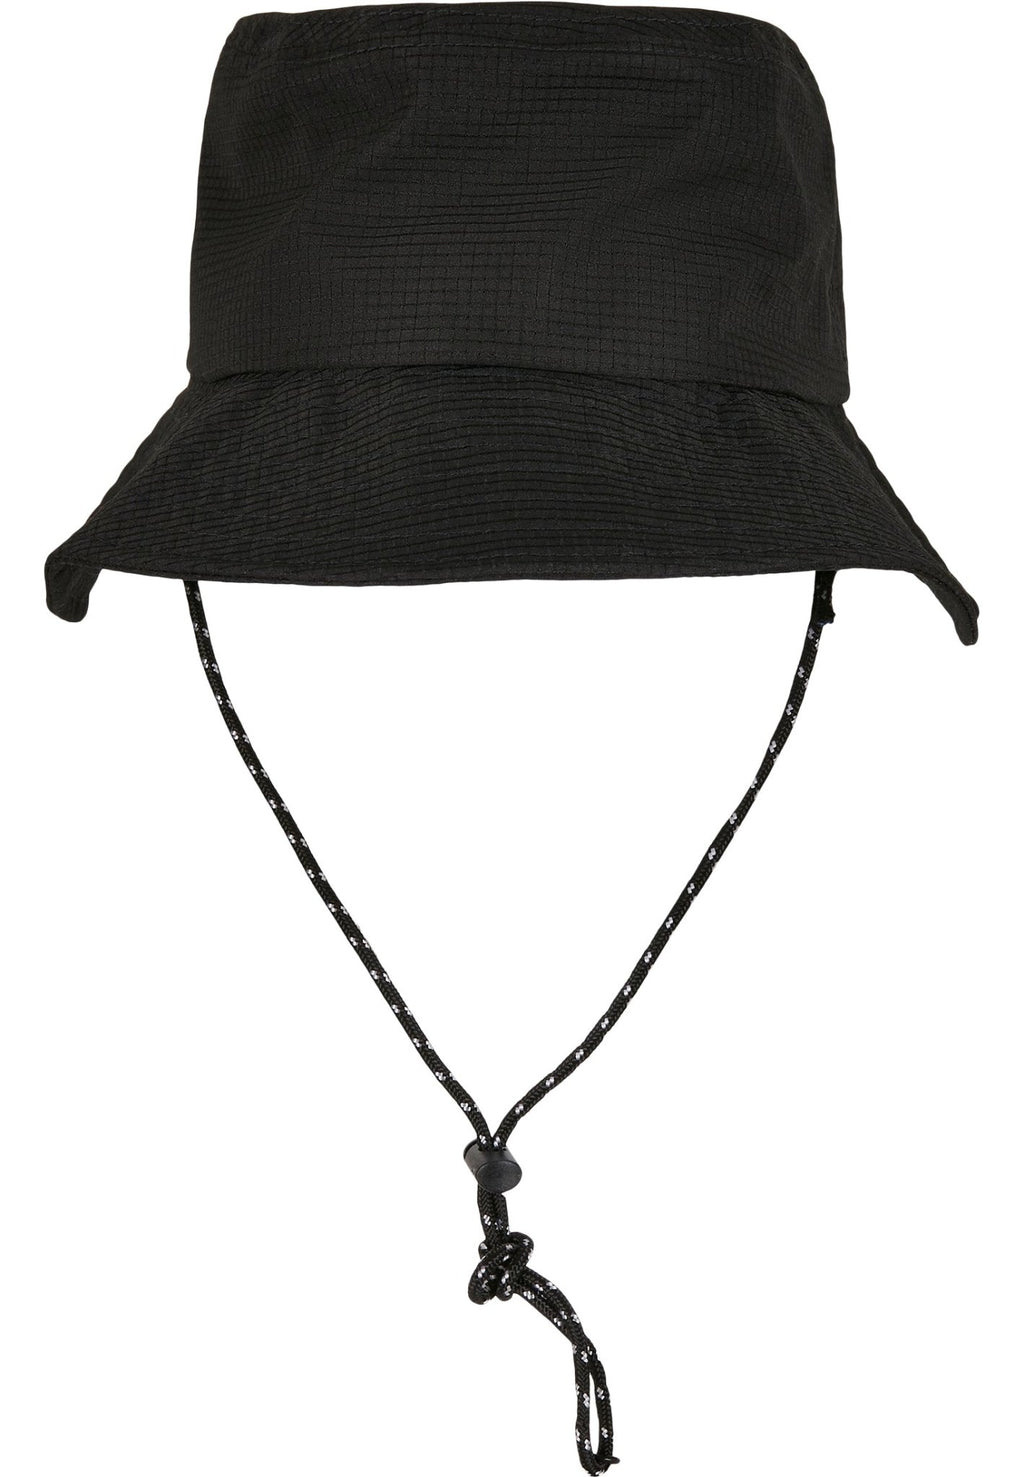 Adjustable Flexfit Bucket Hat - Black